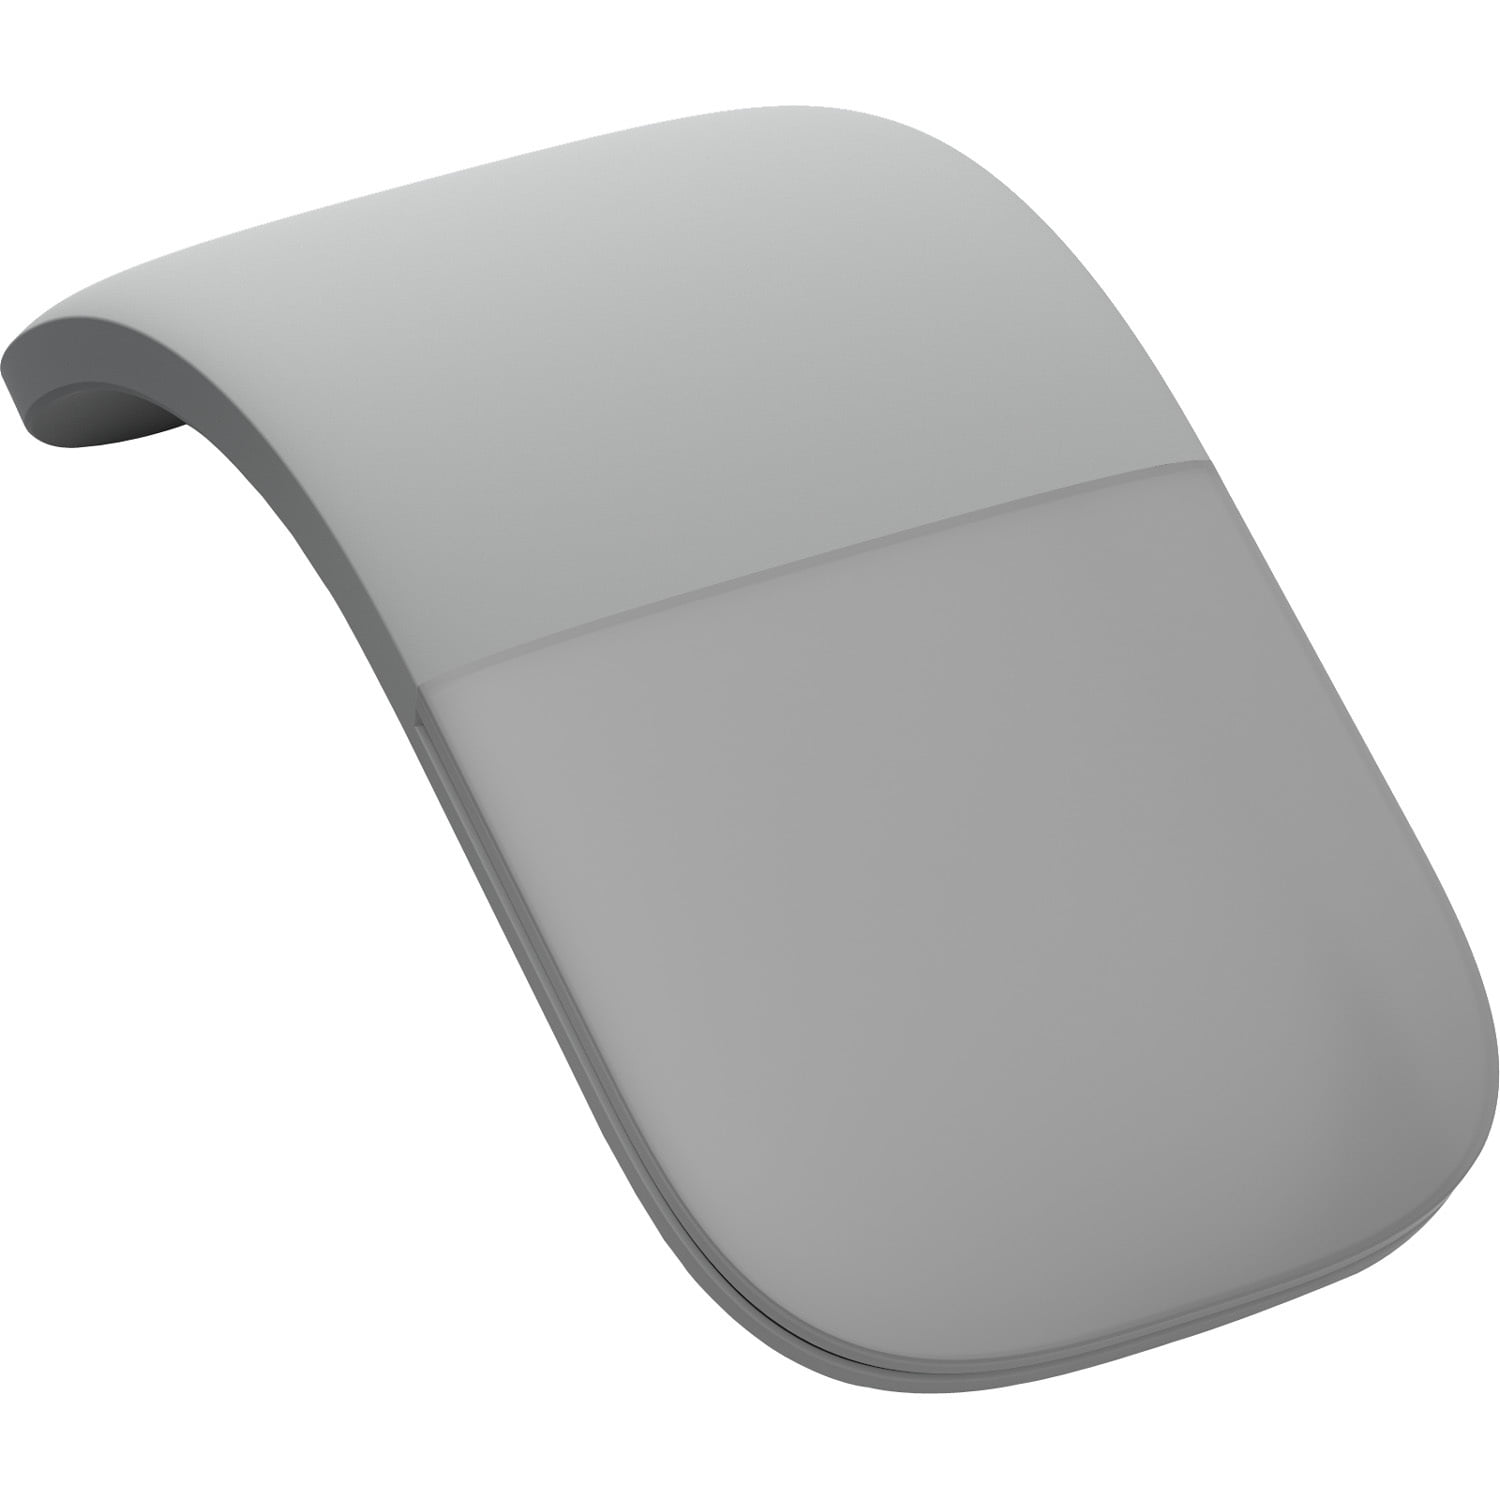 Grey, Arc Surface CZV-00001 Microsoft Light Mouse,